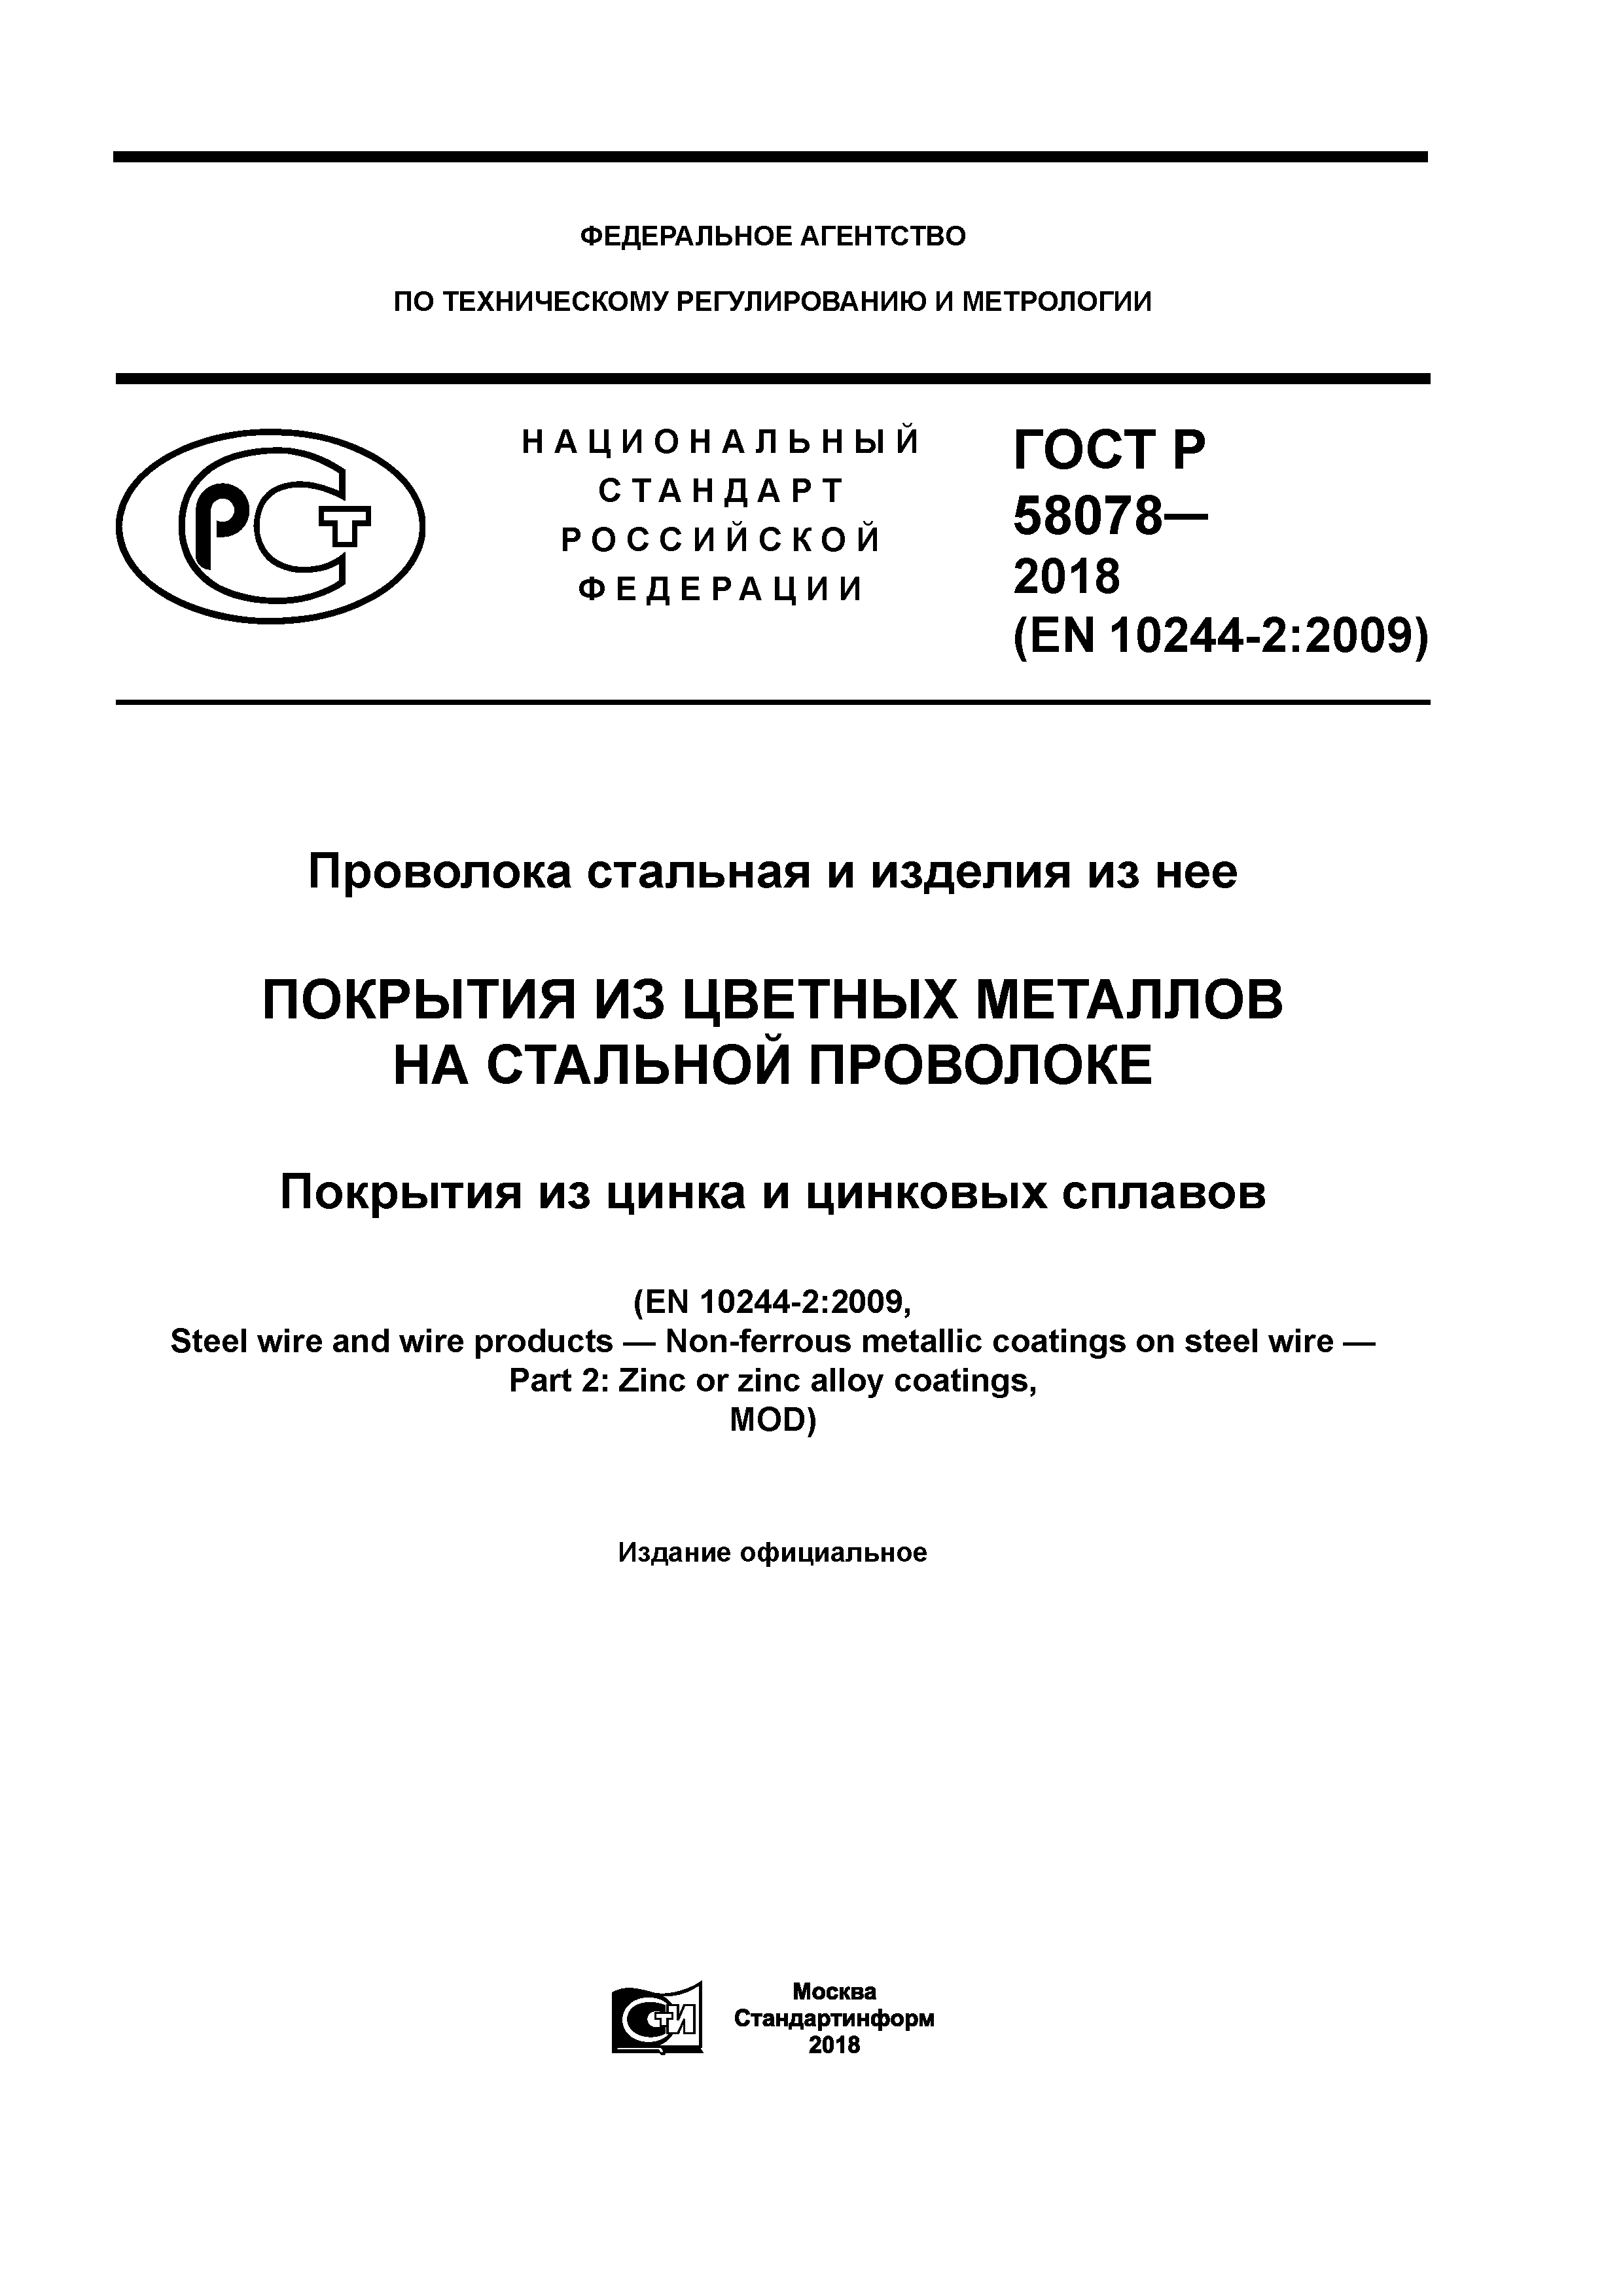 ГОСТ Р 58078-2018